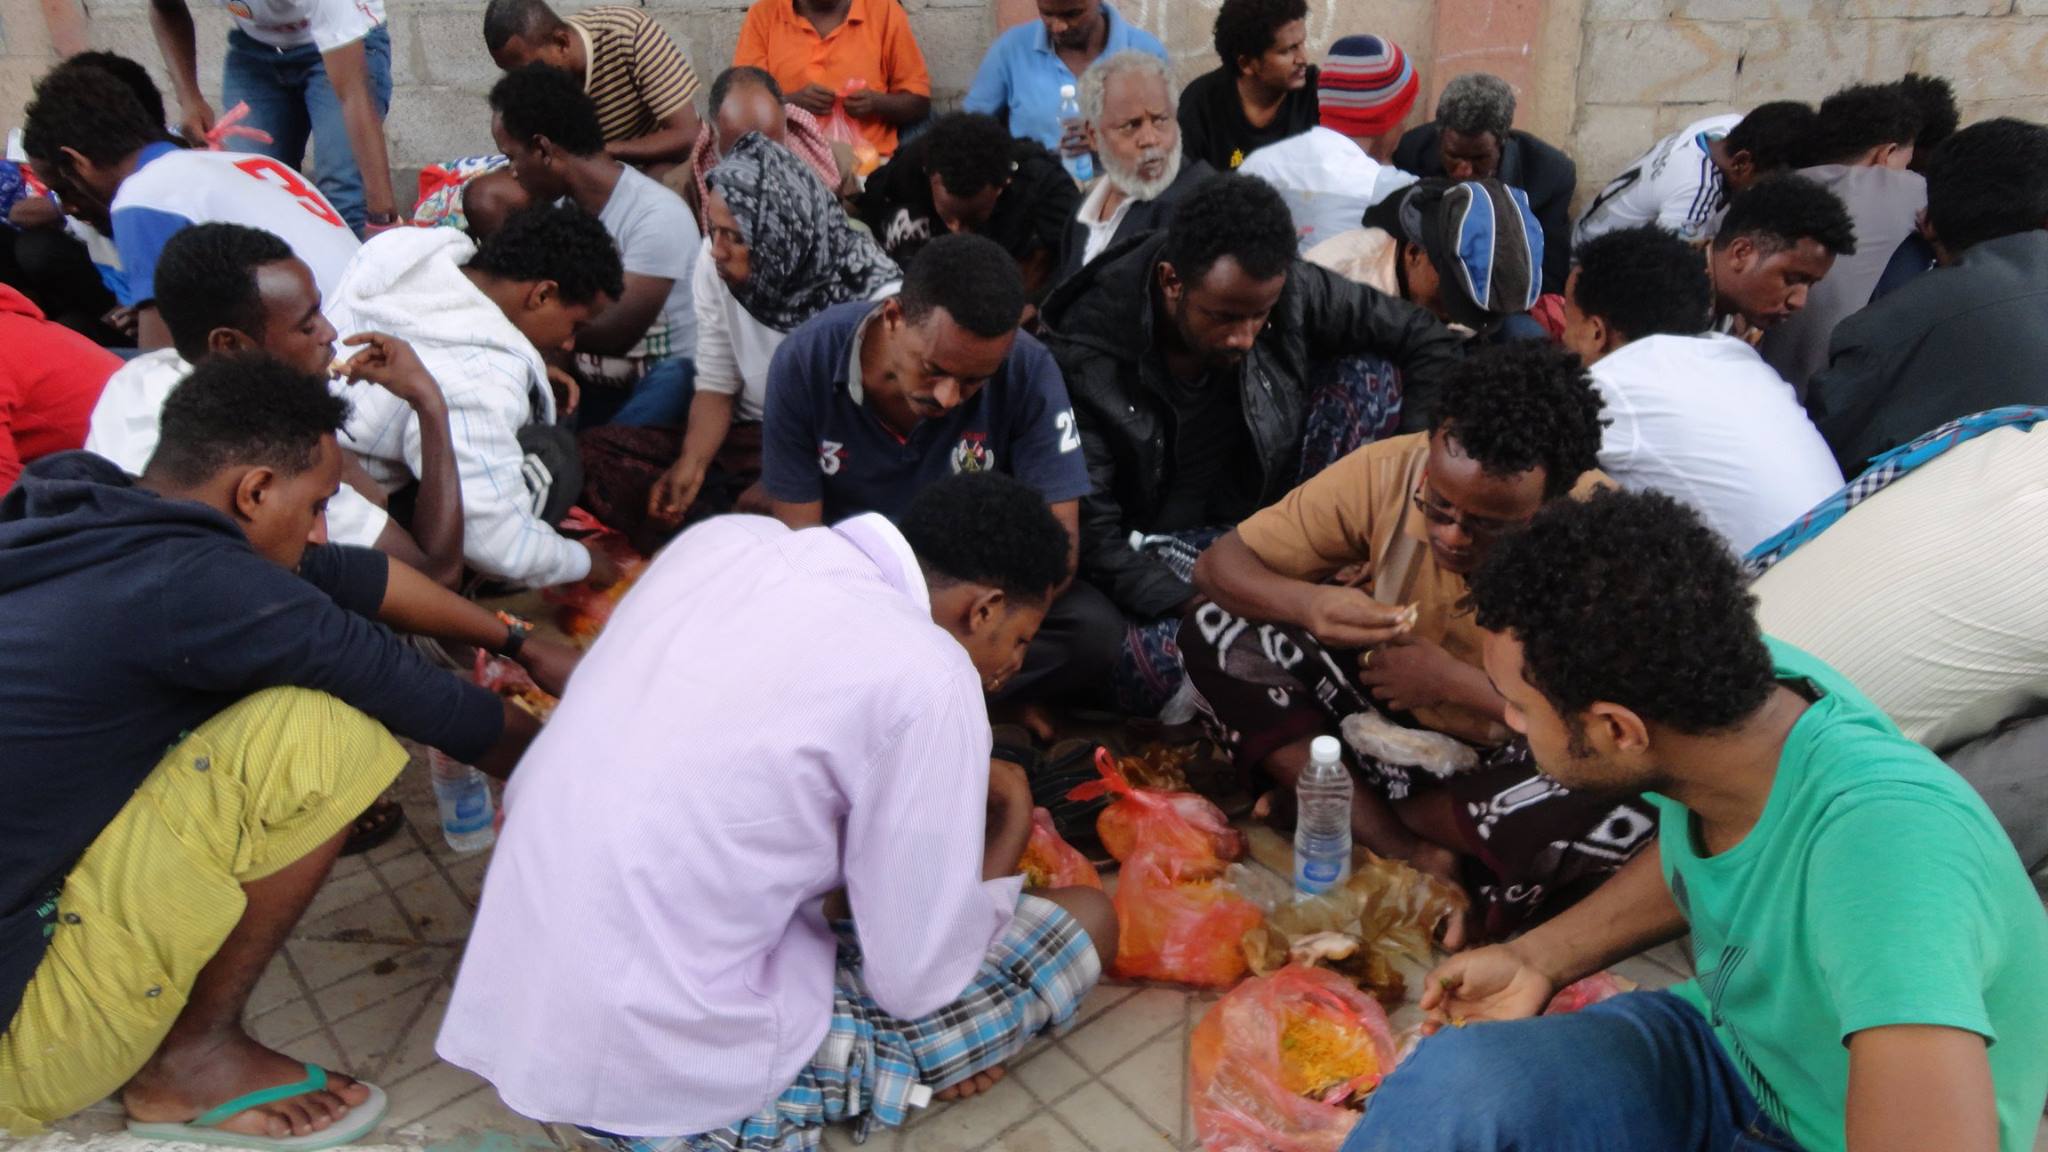 Eritrea: The Homeless Eritreans in the streets of Yemen